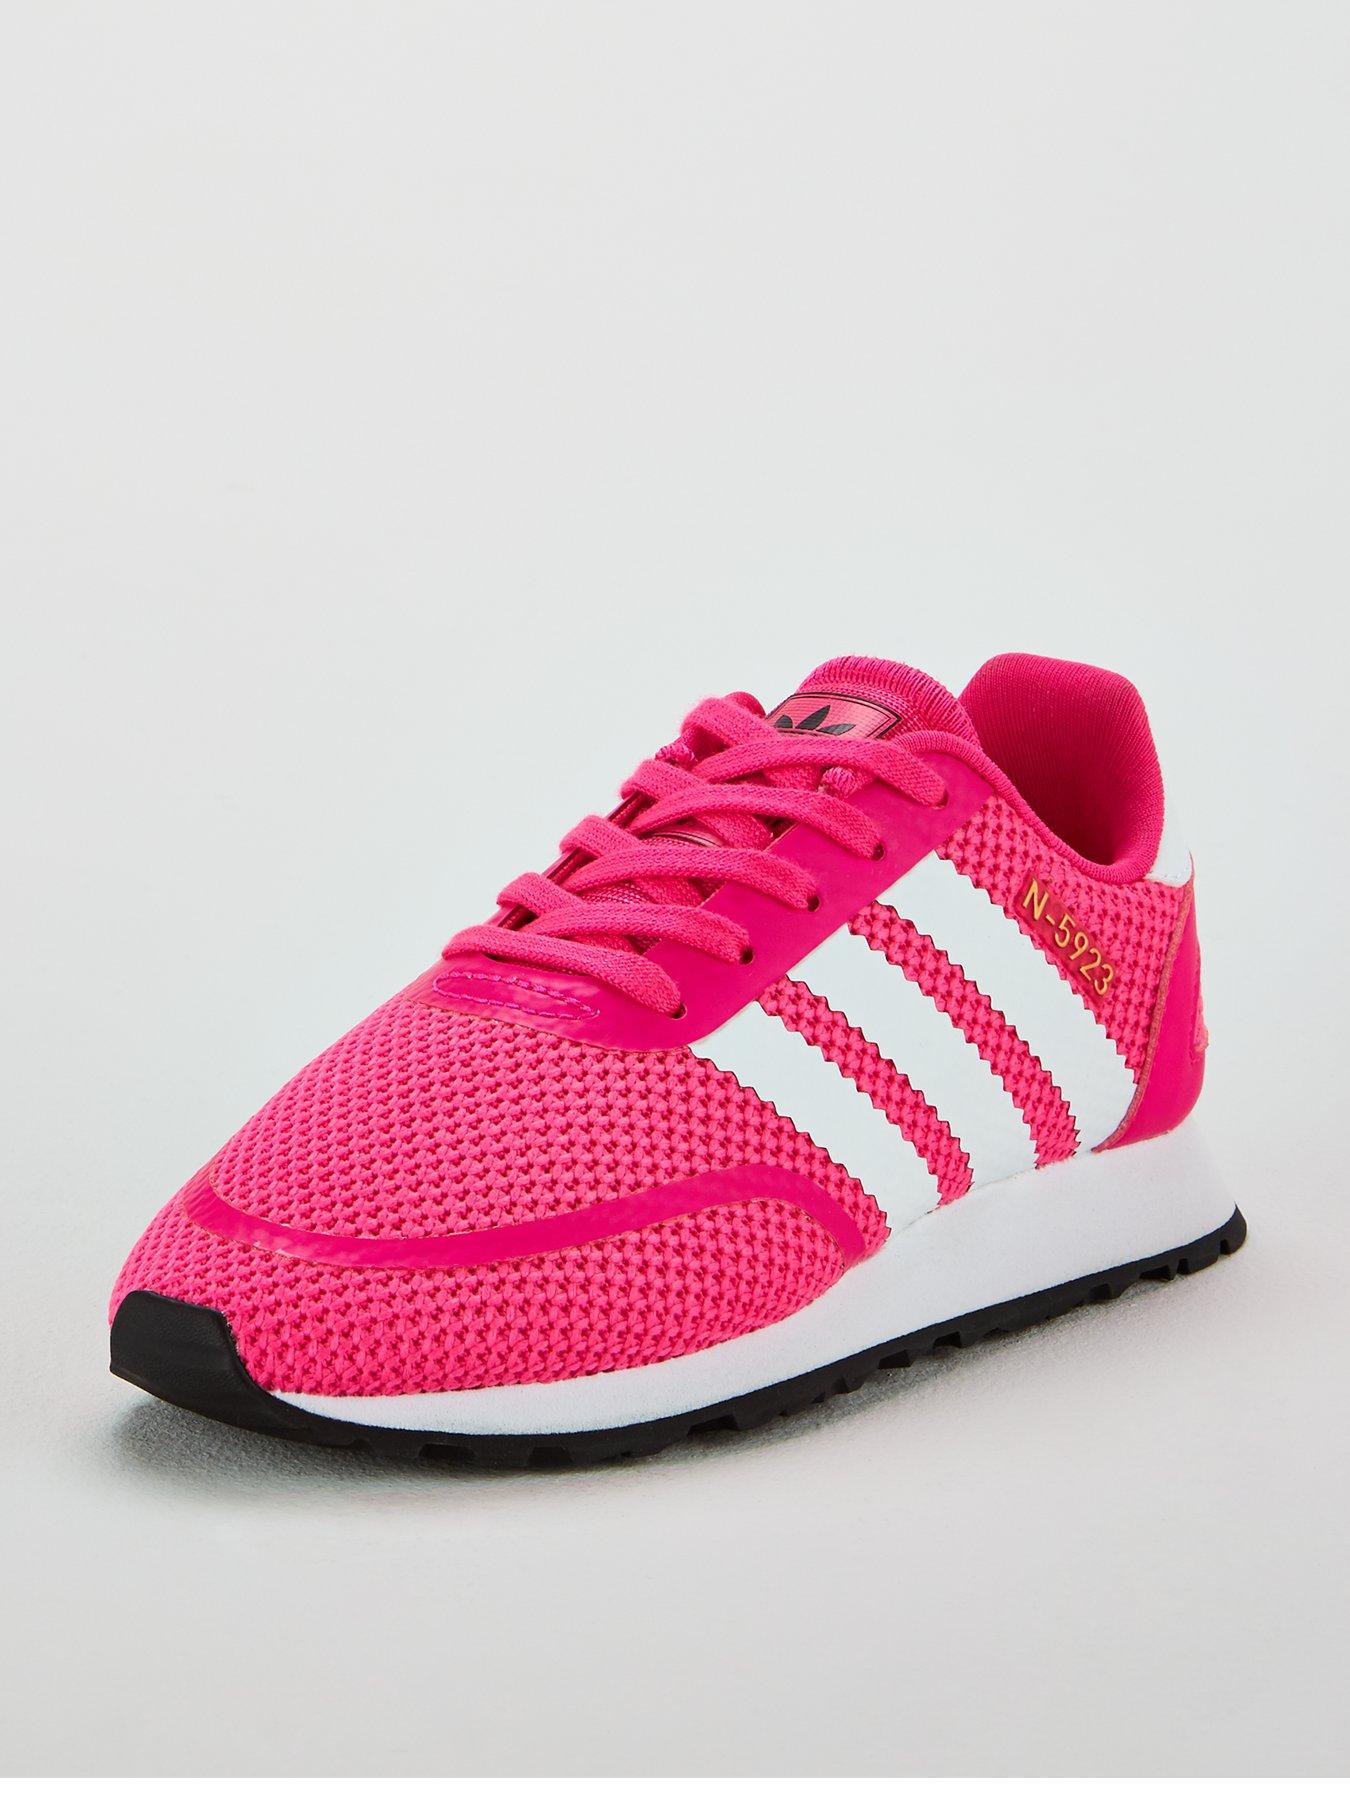 adidas n9523 pink